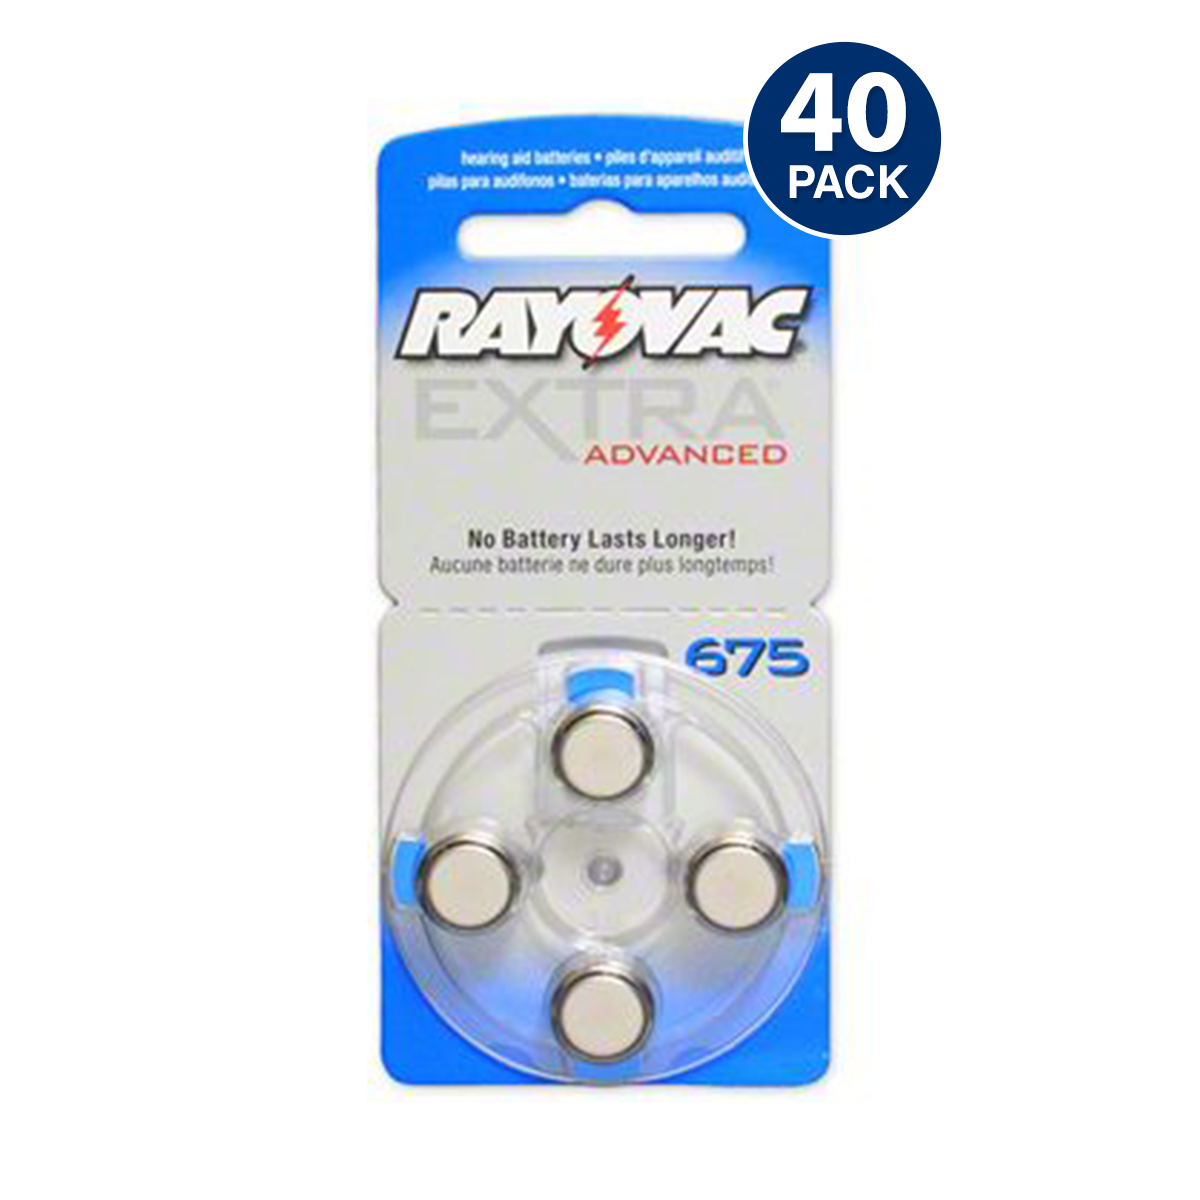 Rayovac 675 Hearing Aid Battery 40 Pack